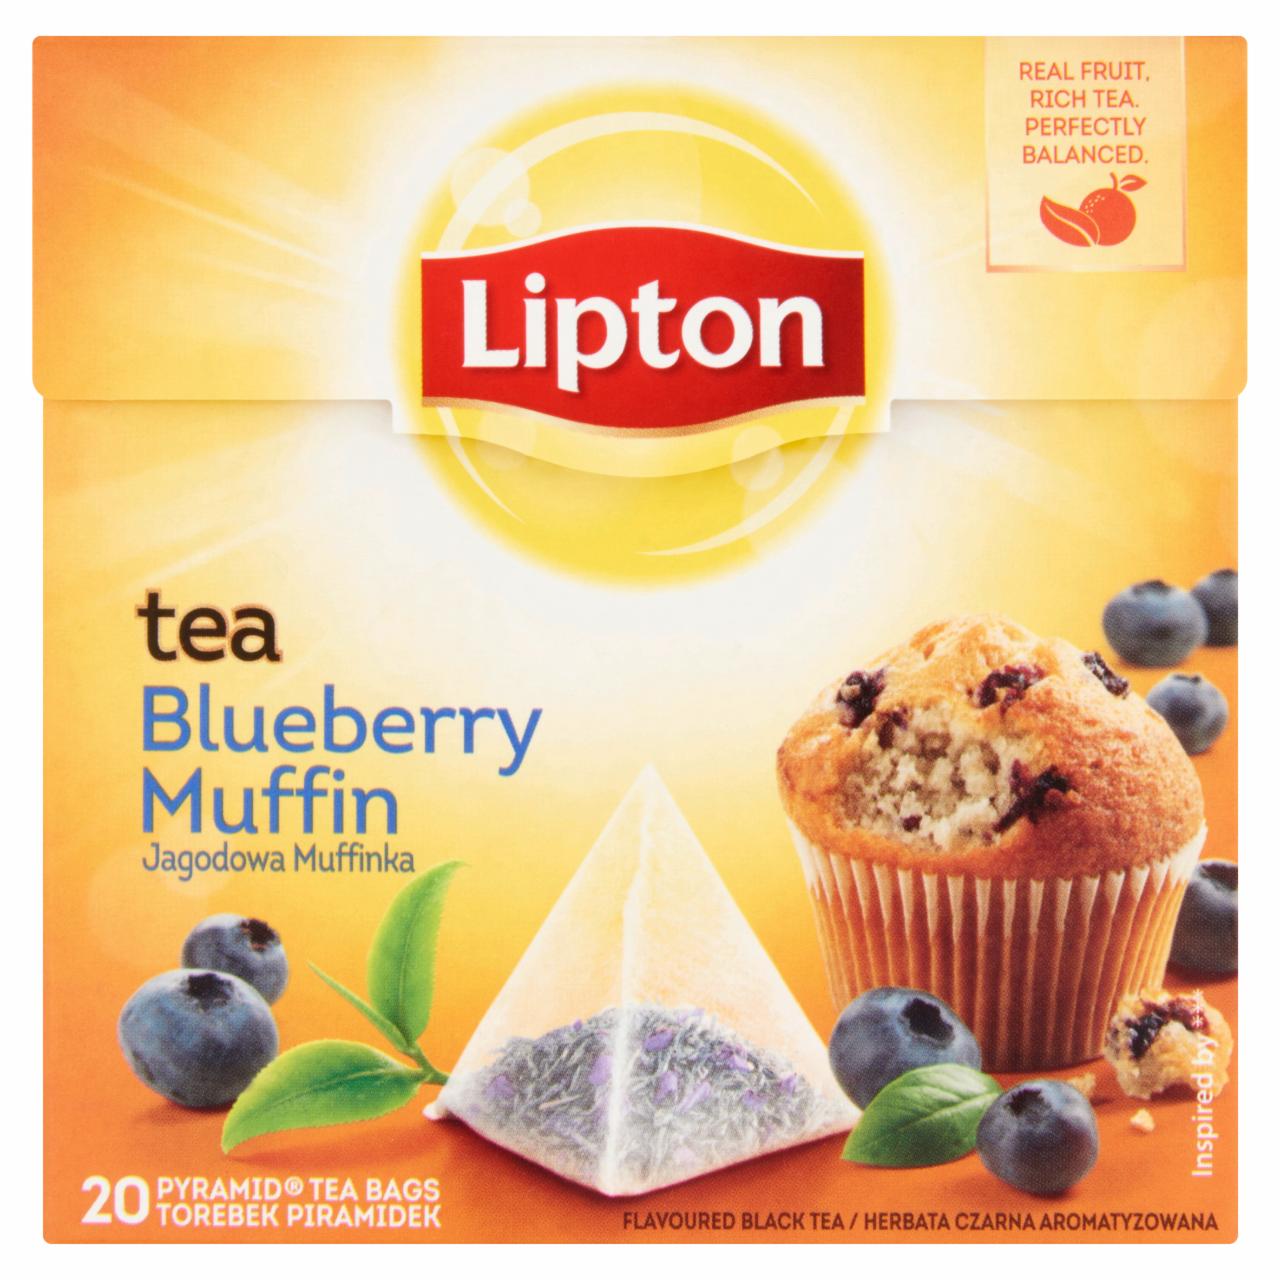 Photo - Lipton Blueberry Muffin Tea 20 Pyramid Tea Bags